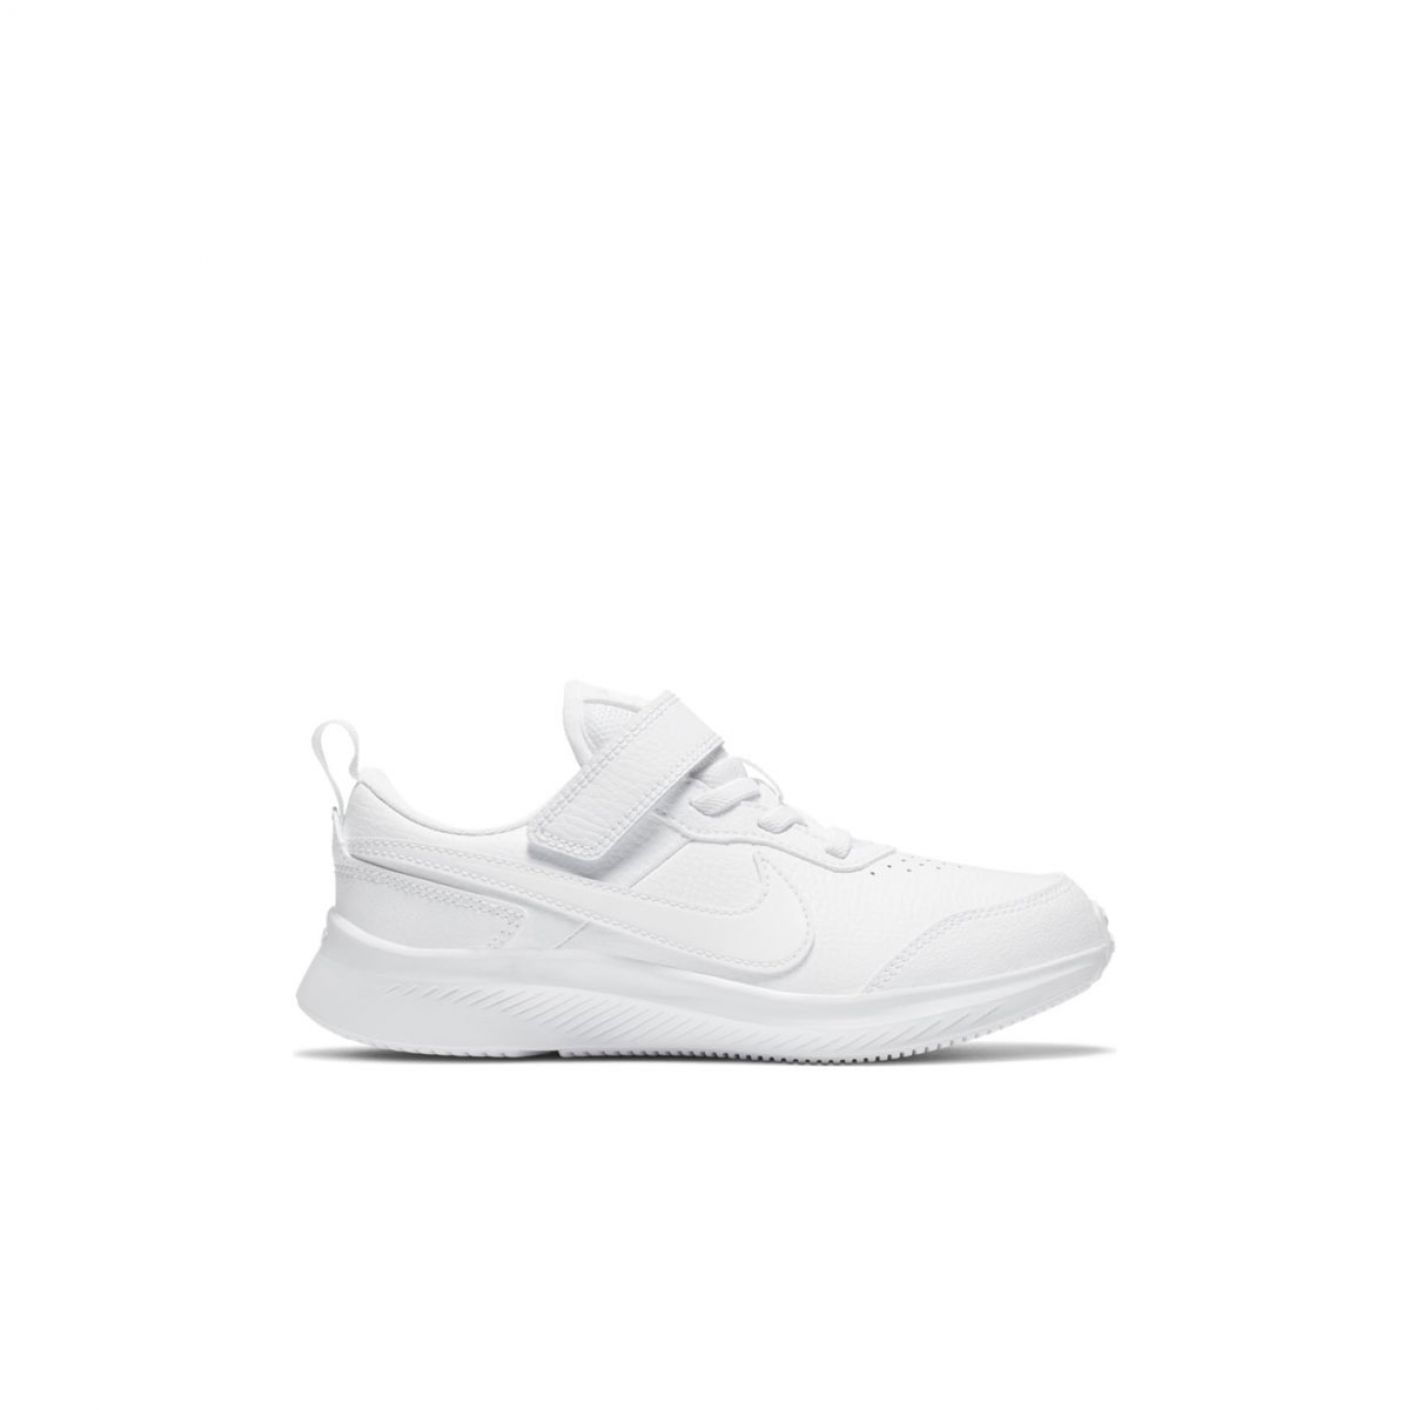 Nike Varsity Leather White da Bambini